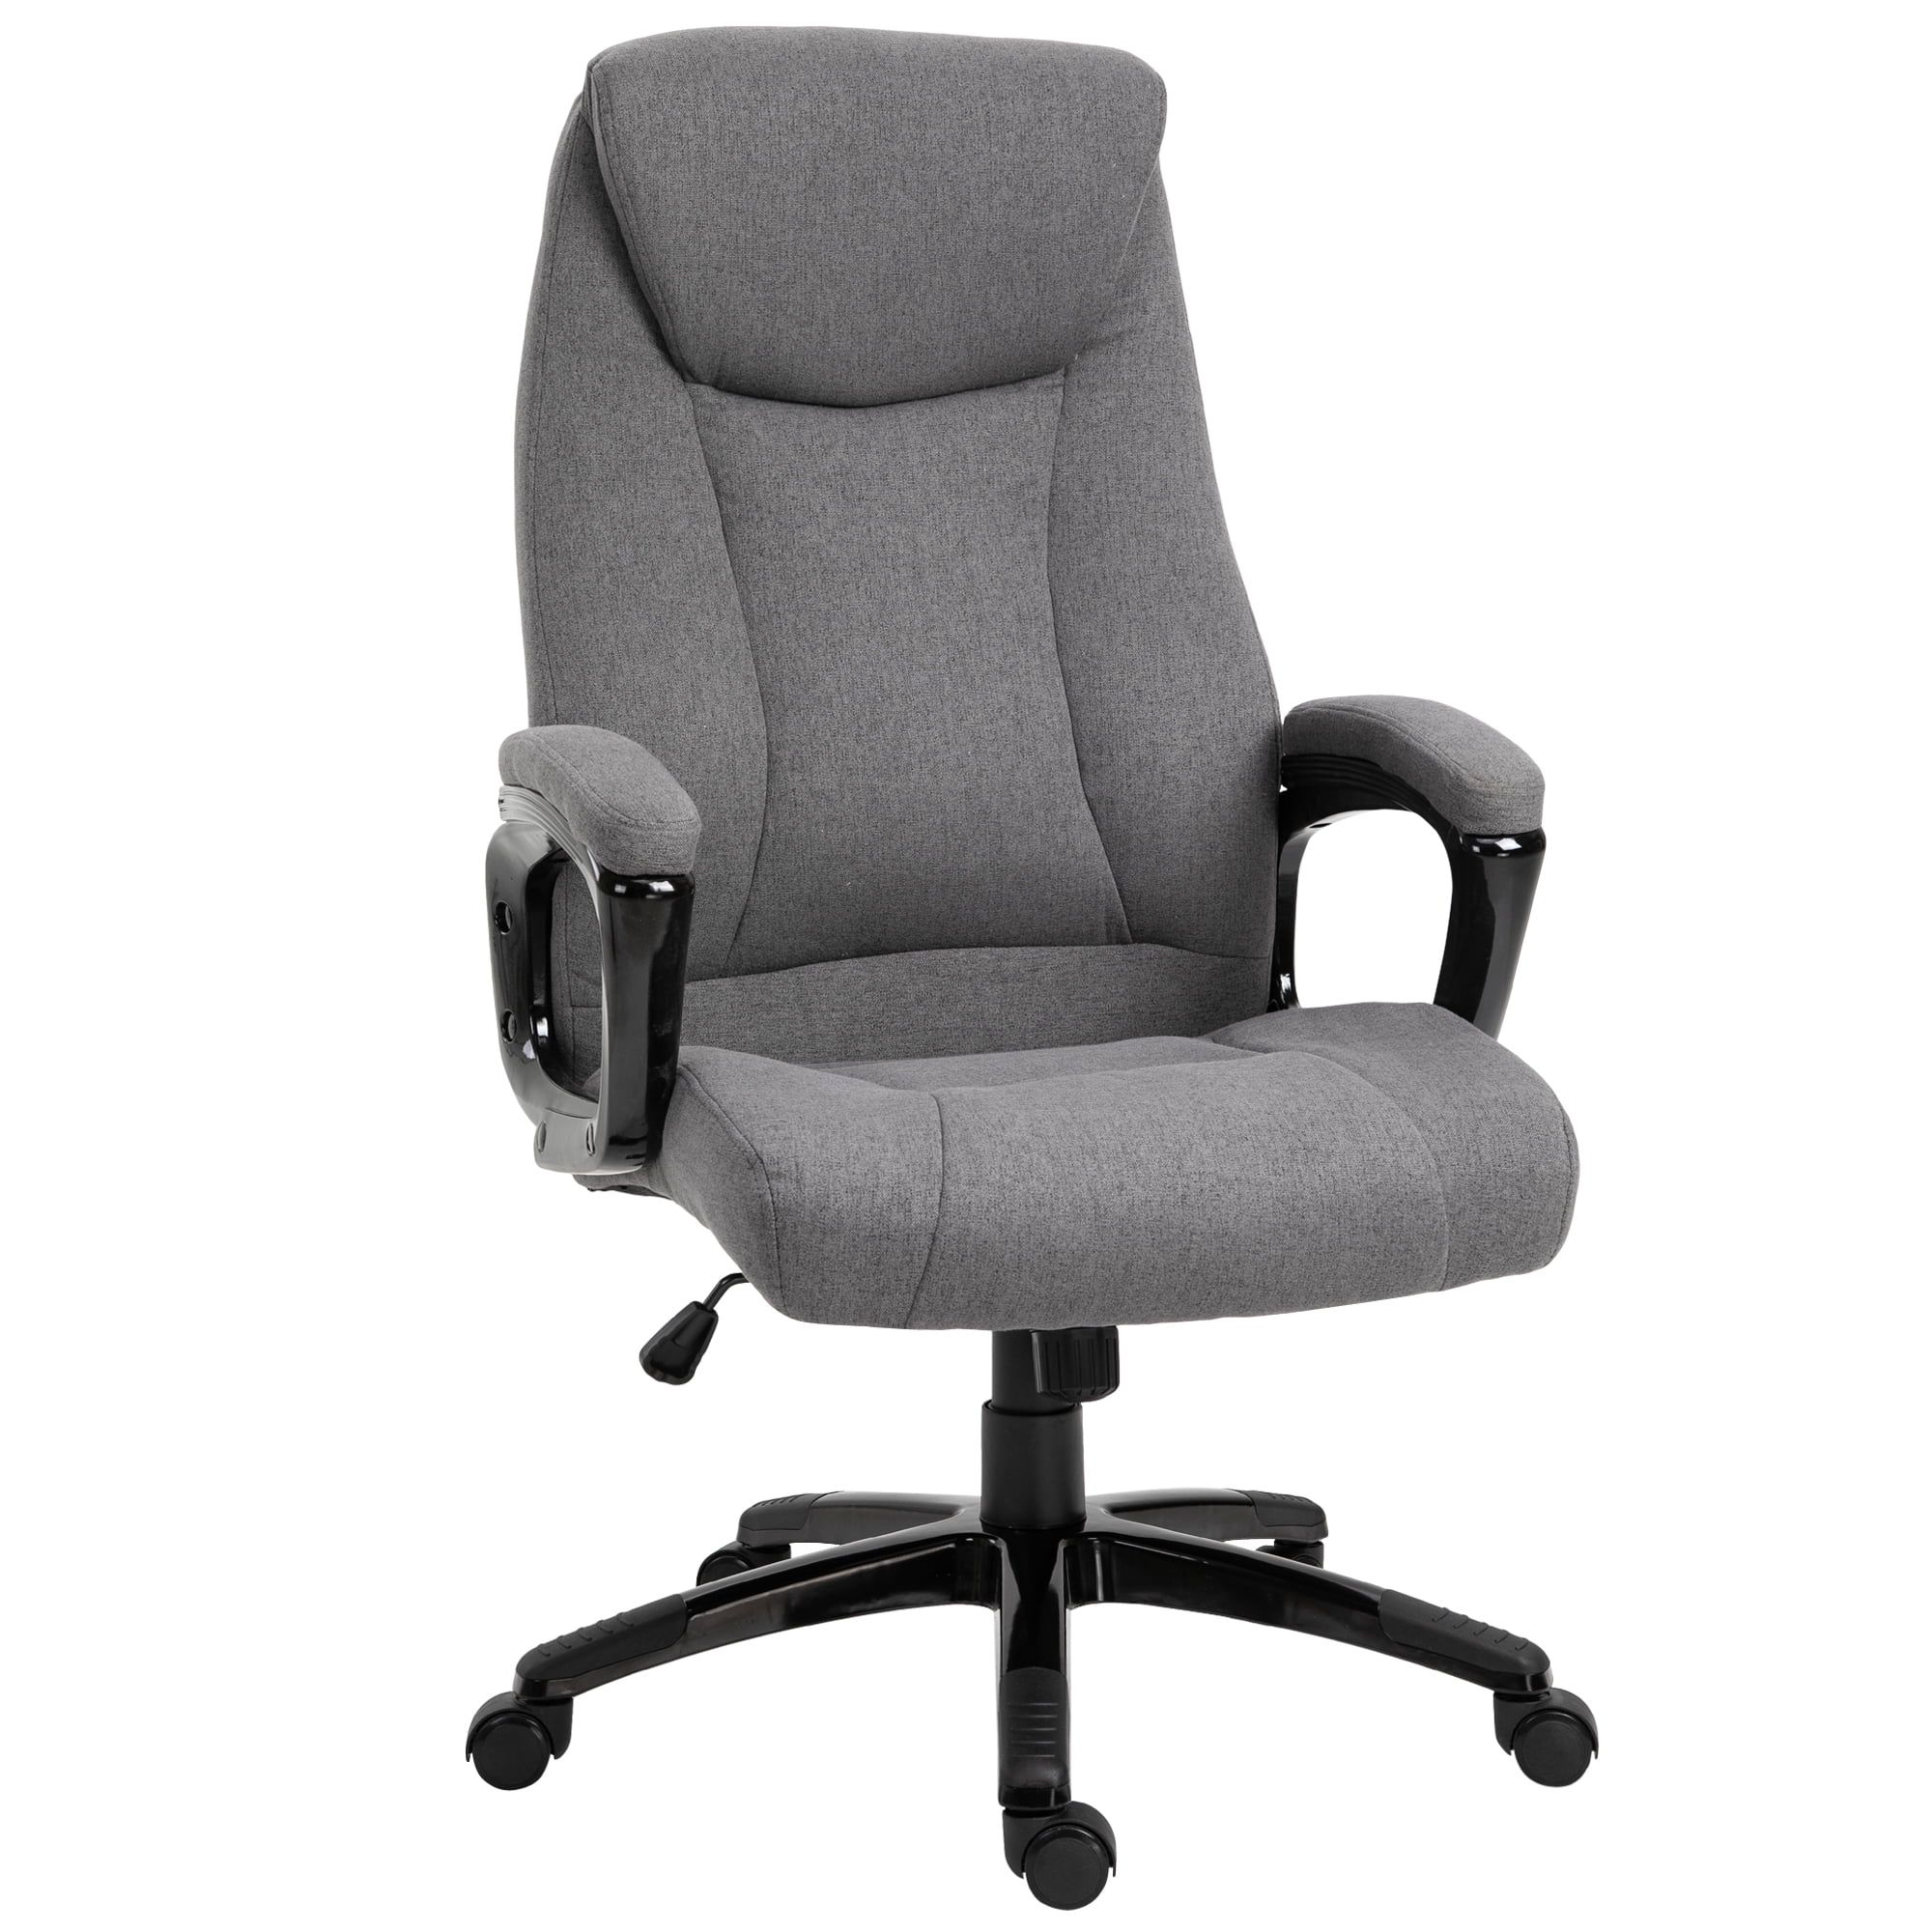 Vinsetto Ergonomic Office Chair Adjustable Height Linen Fabric Rocker